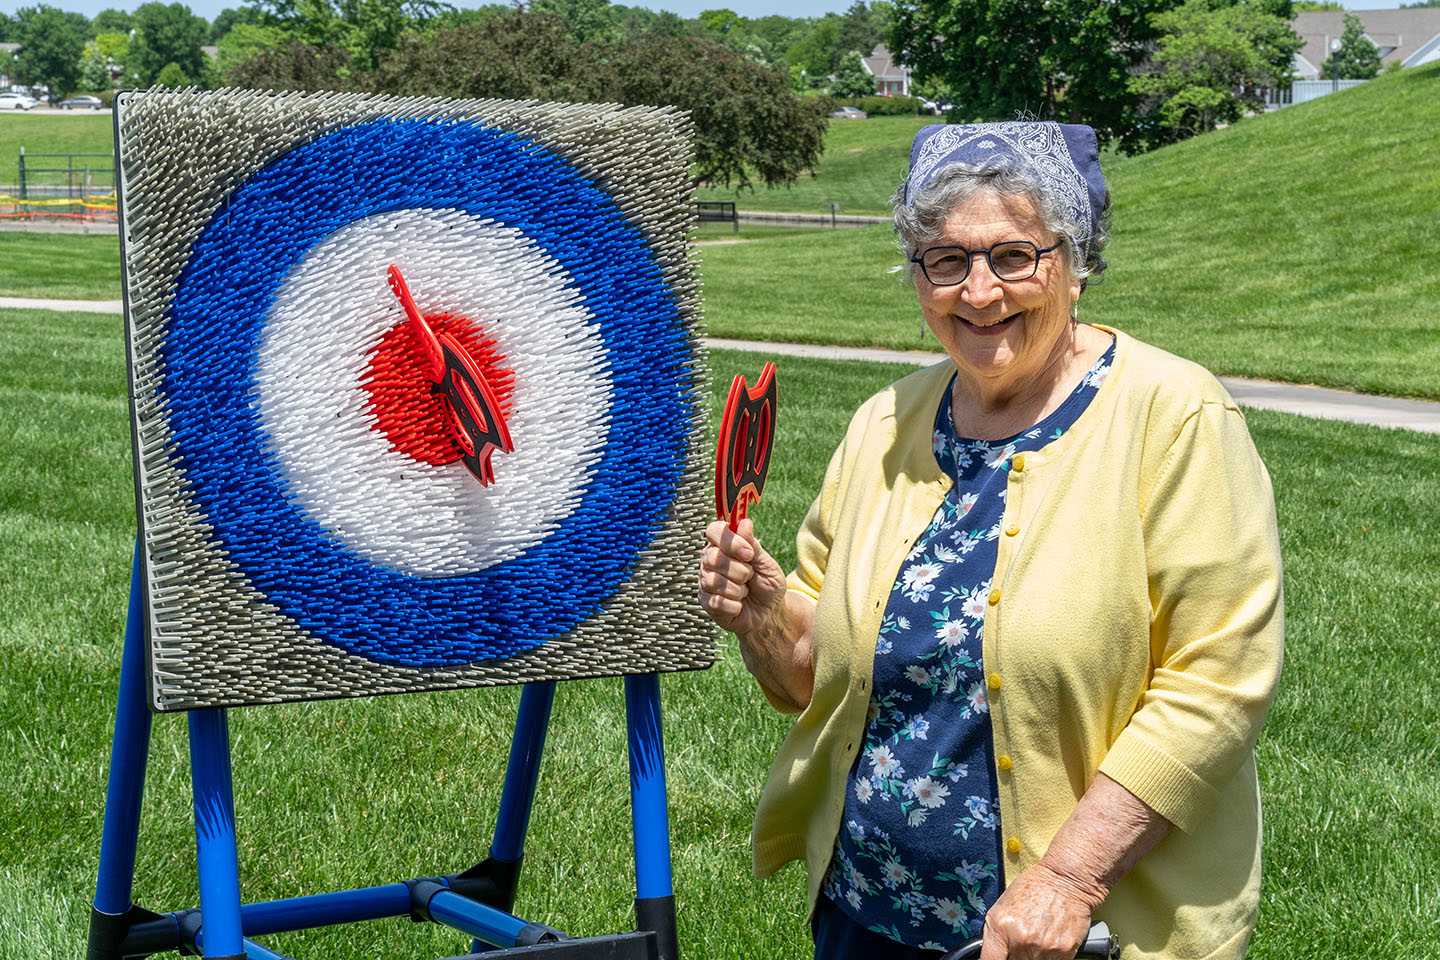 A senior woman celebrates a bullseye in a yard axe throwing game.